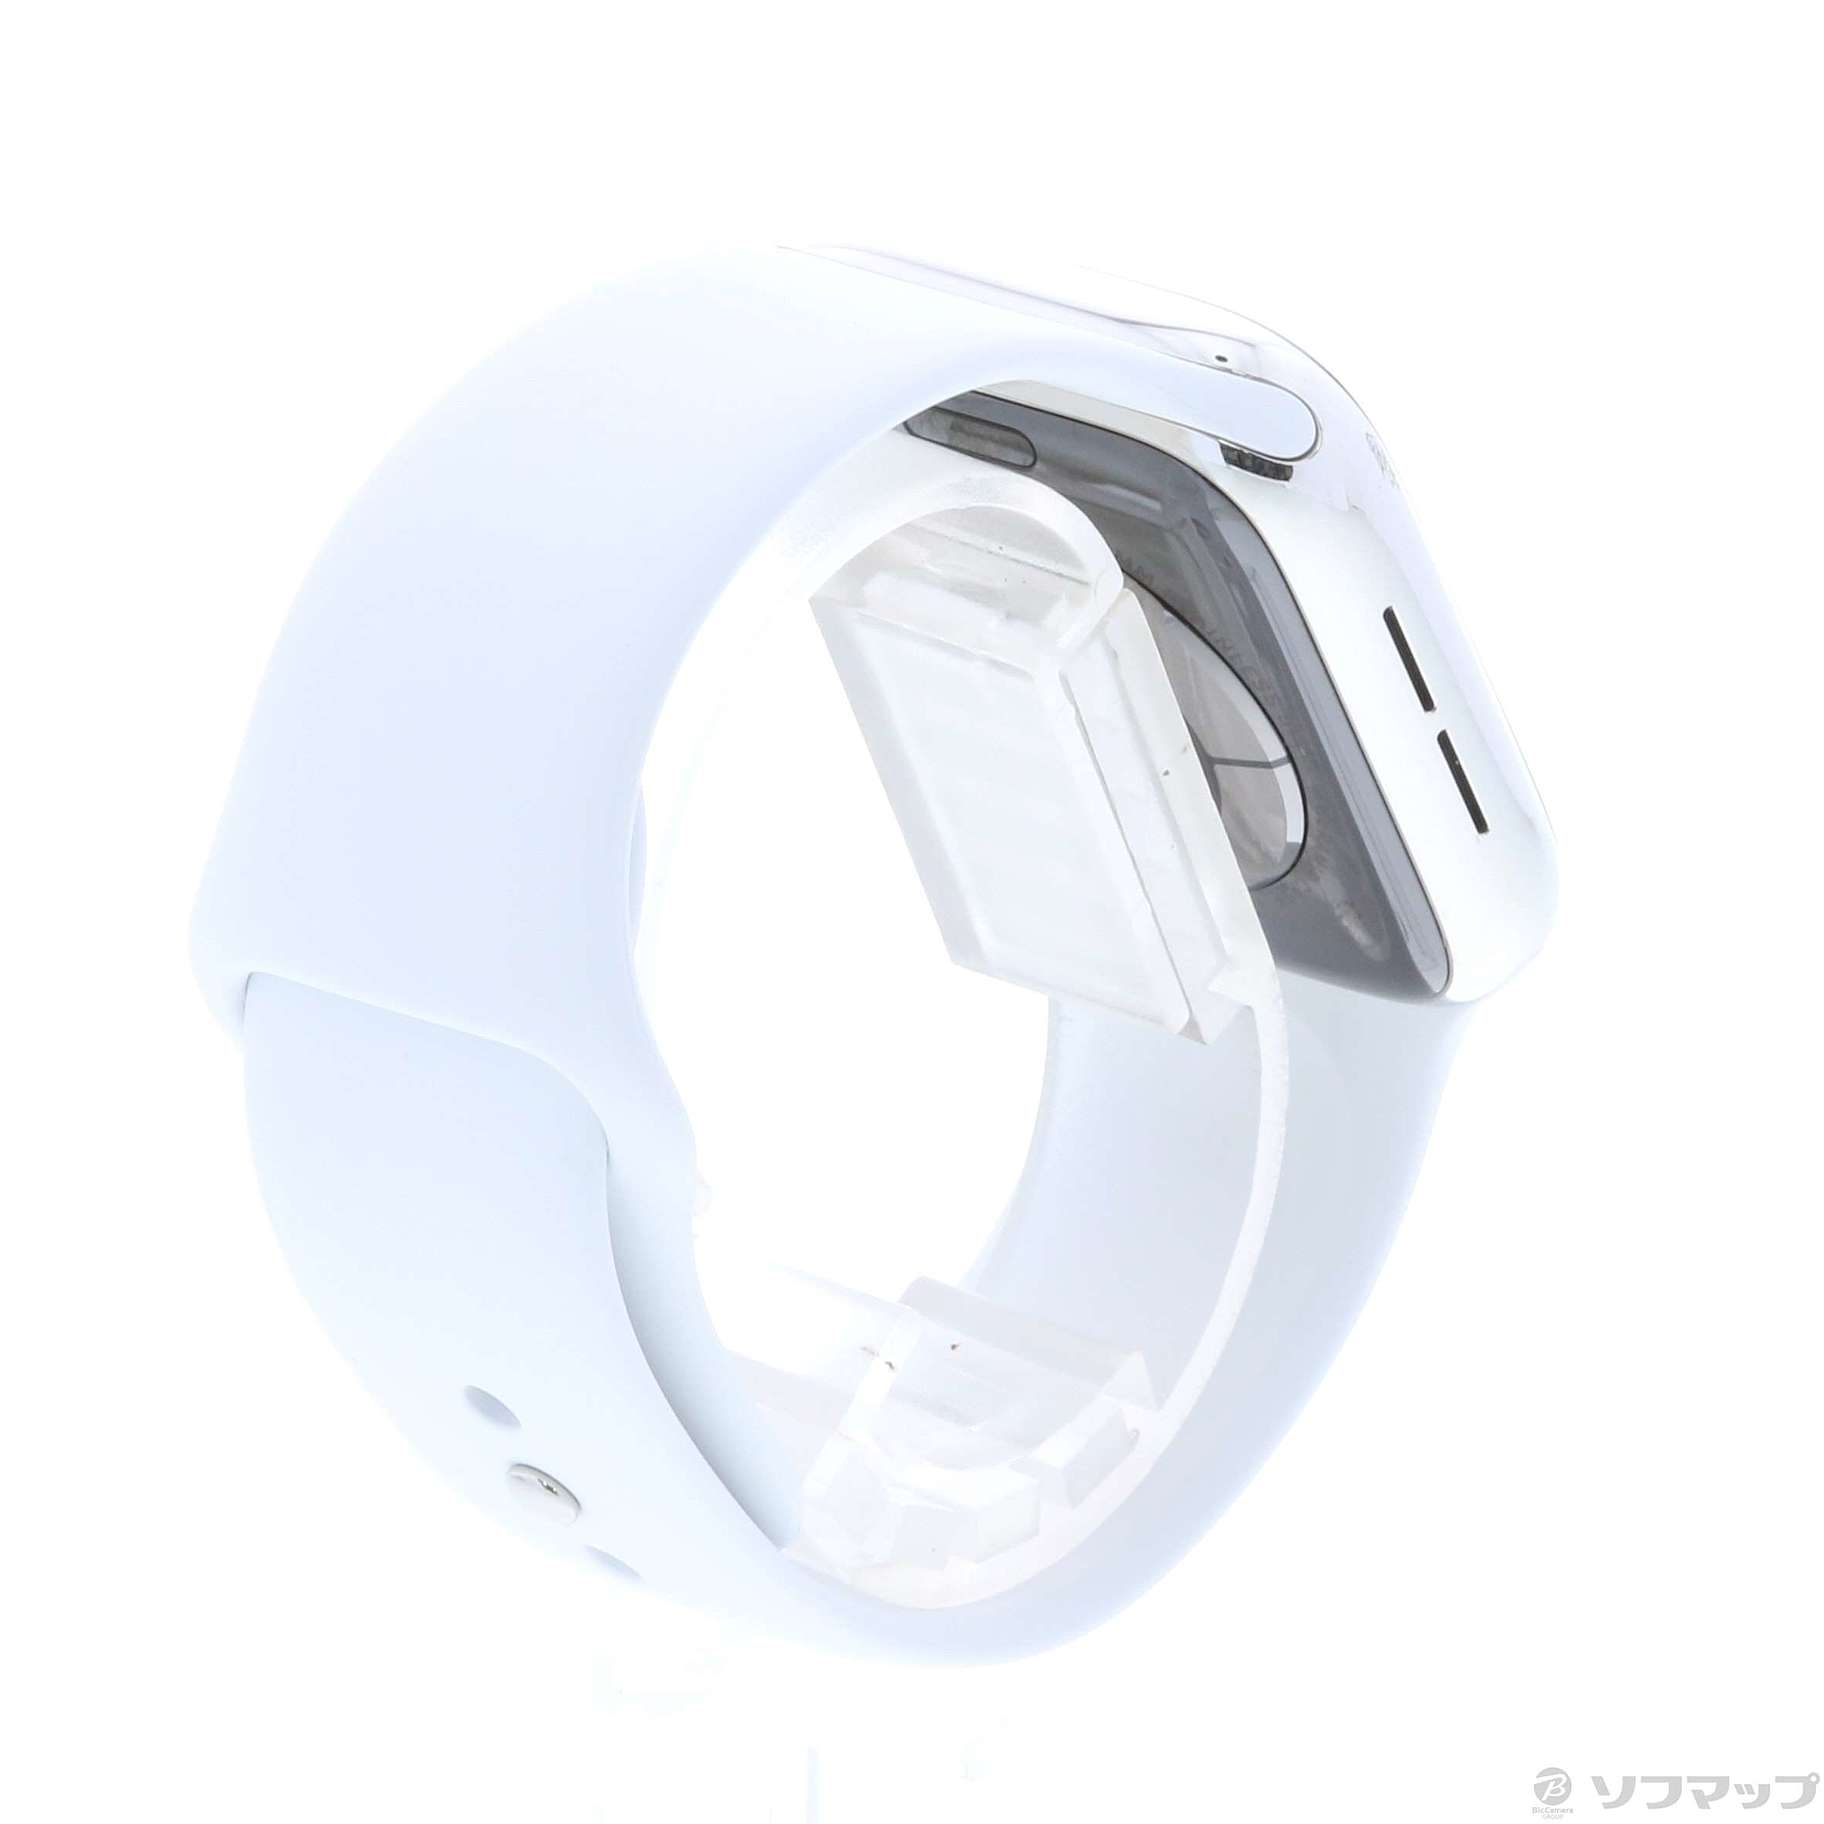 中古】〔展示品〕 Apple Watch Series 5 GPS + Cellular 44mm 